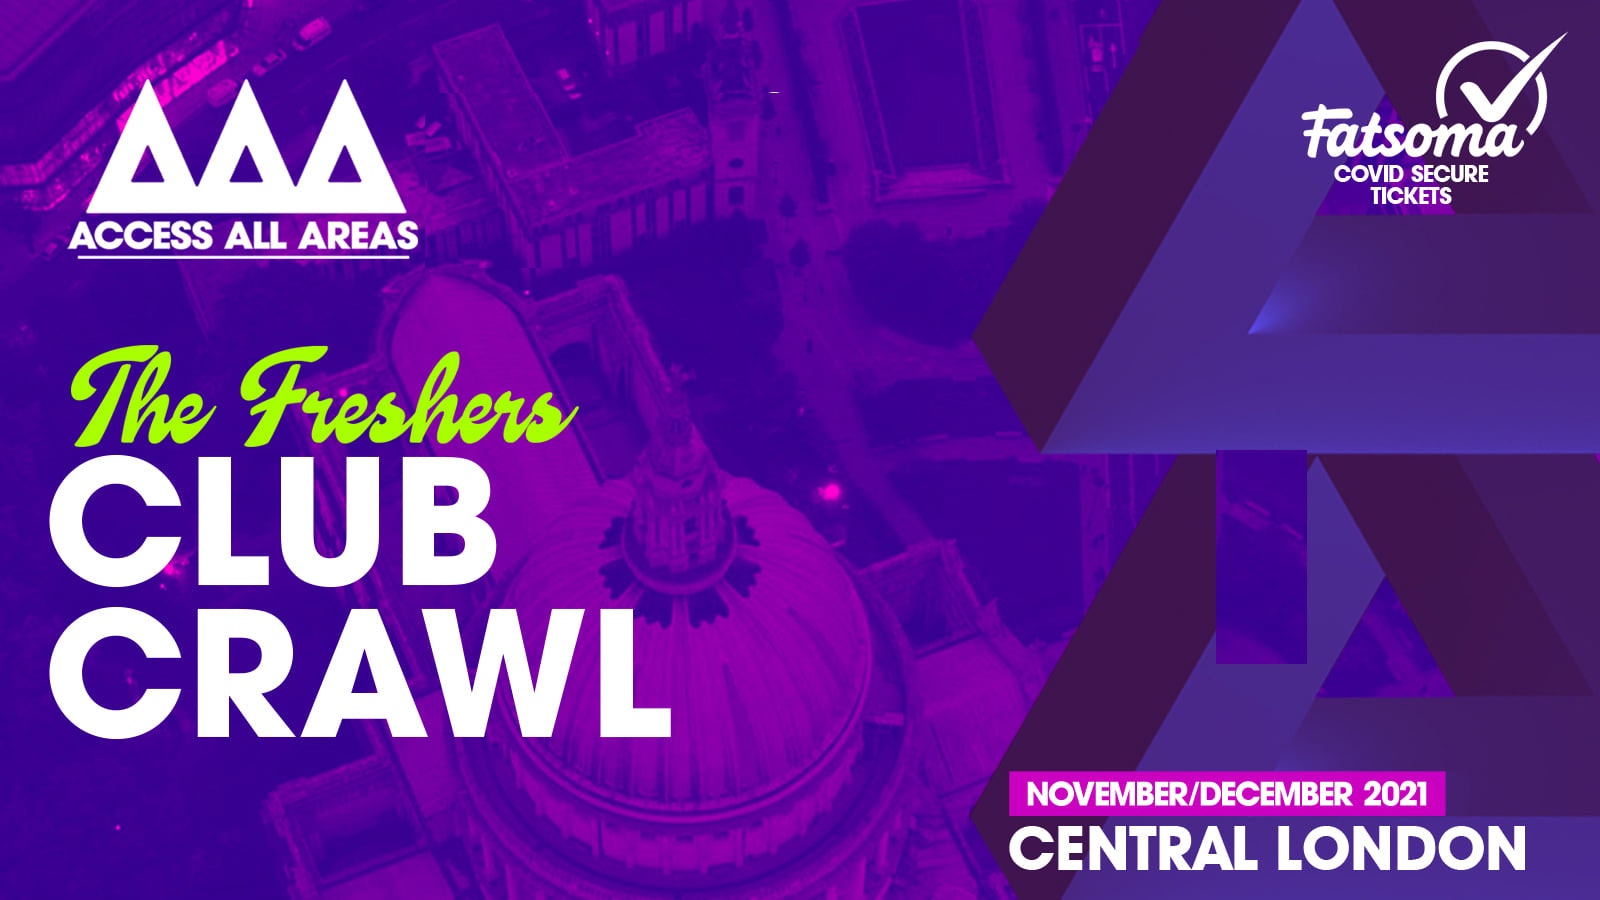 The Friday Night Freshers Club Crawl 🍻 December 10th 2021 💥